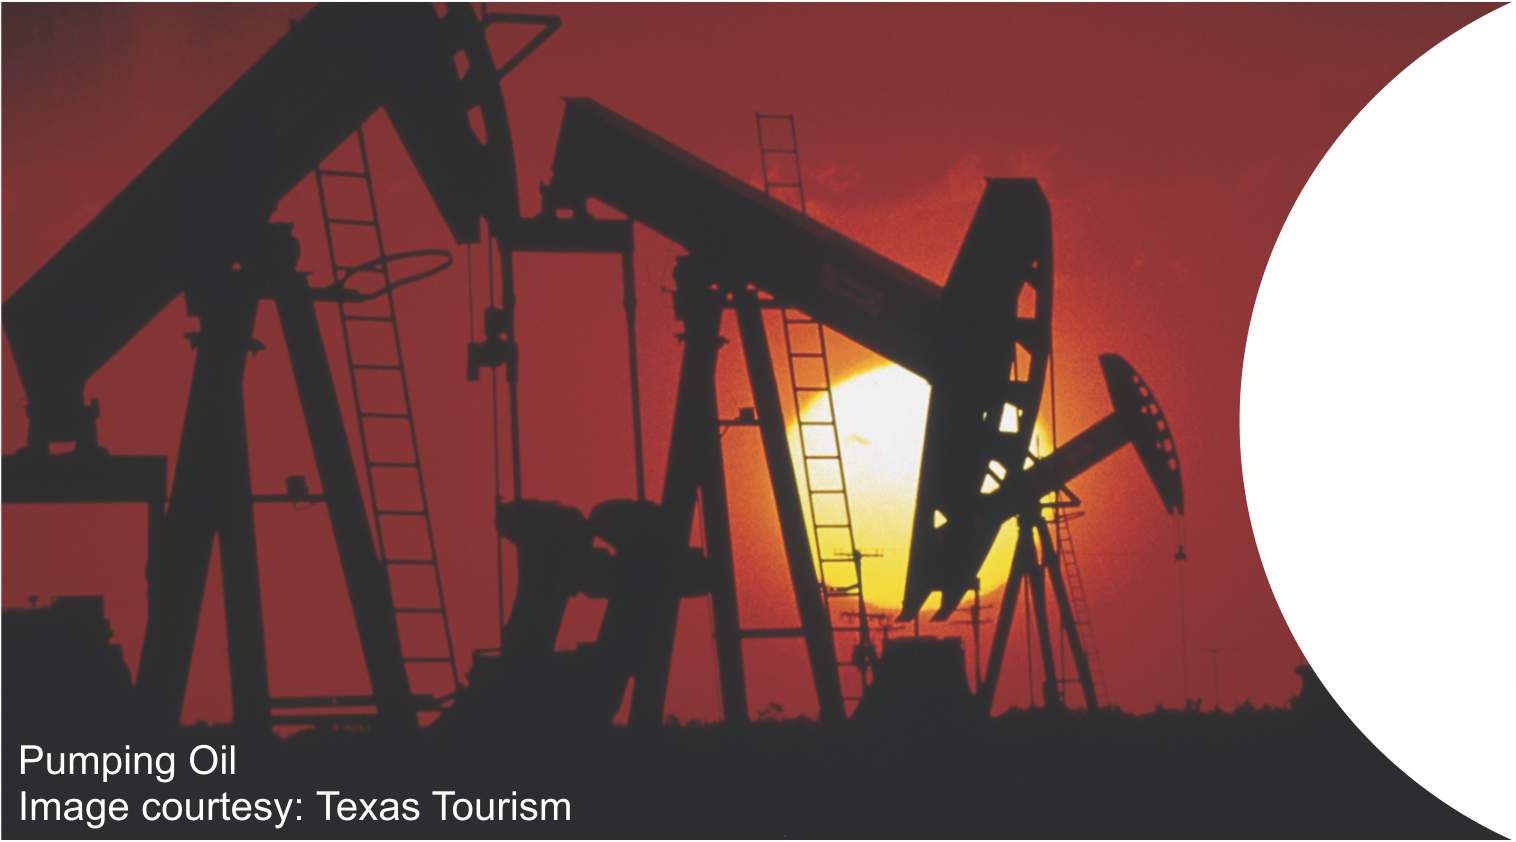 Texas LHS image